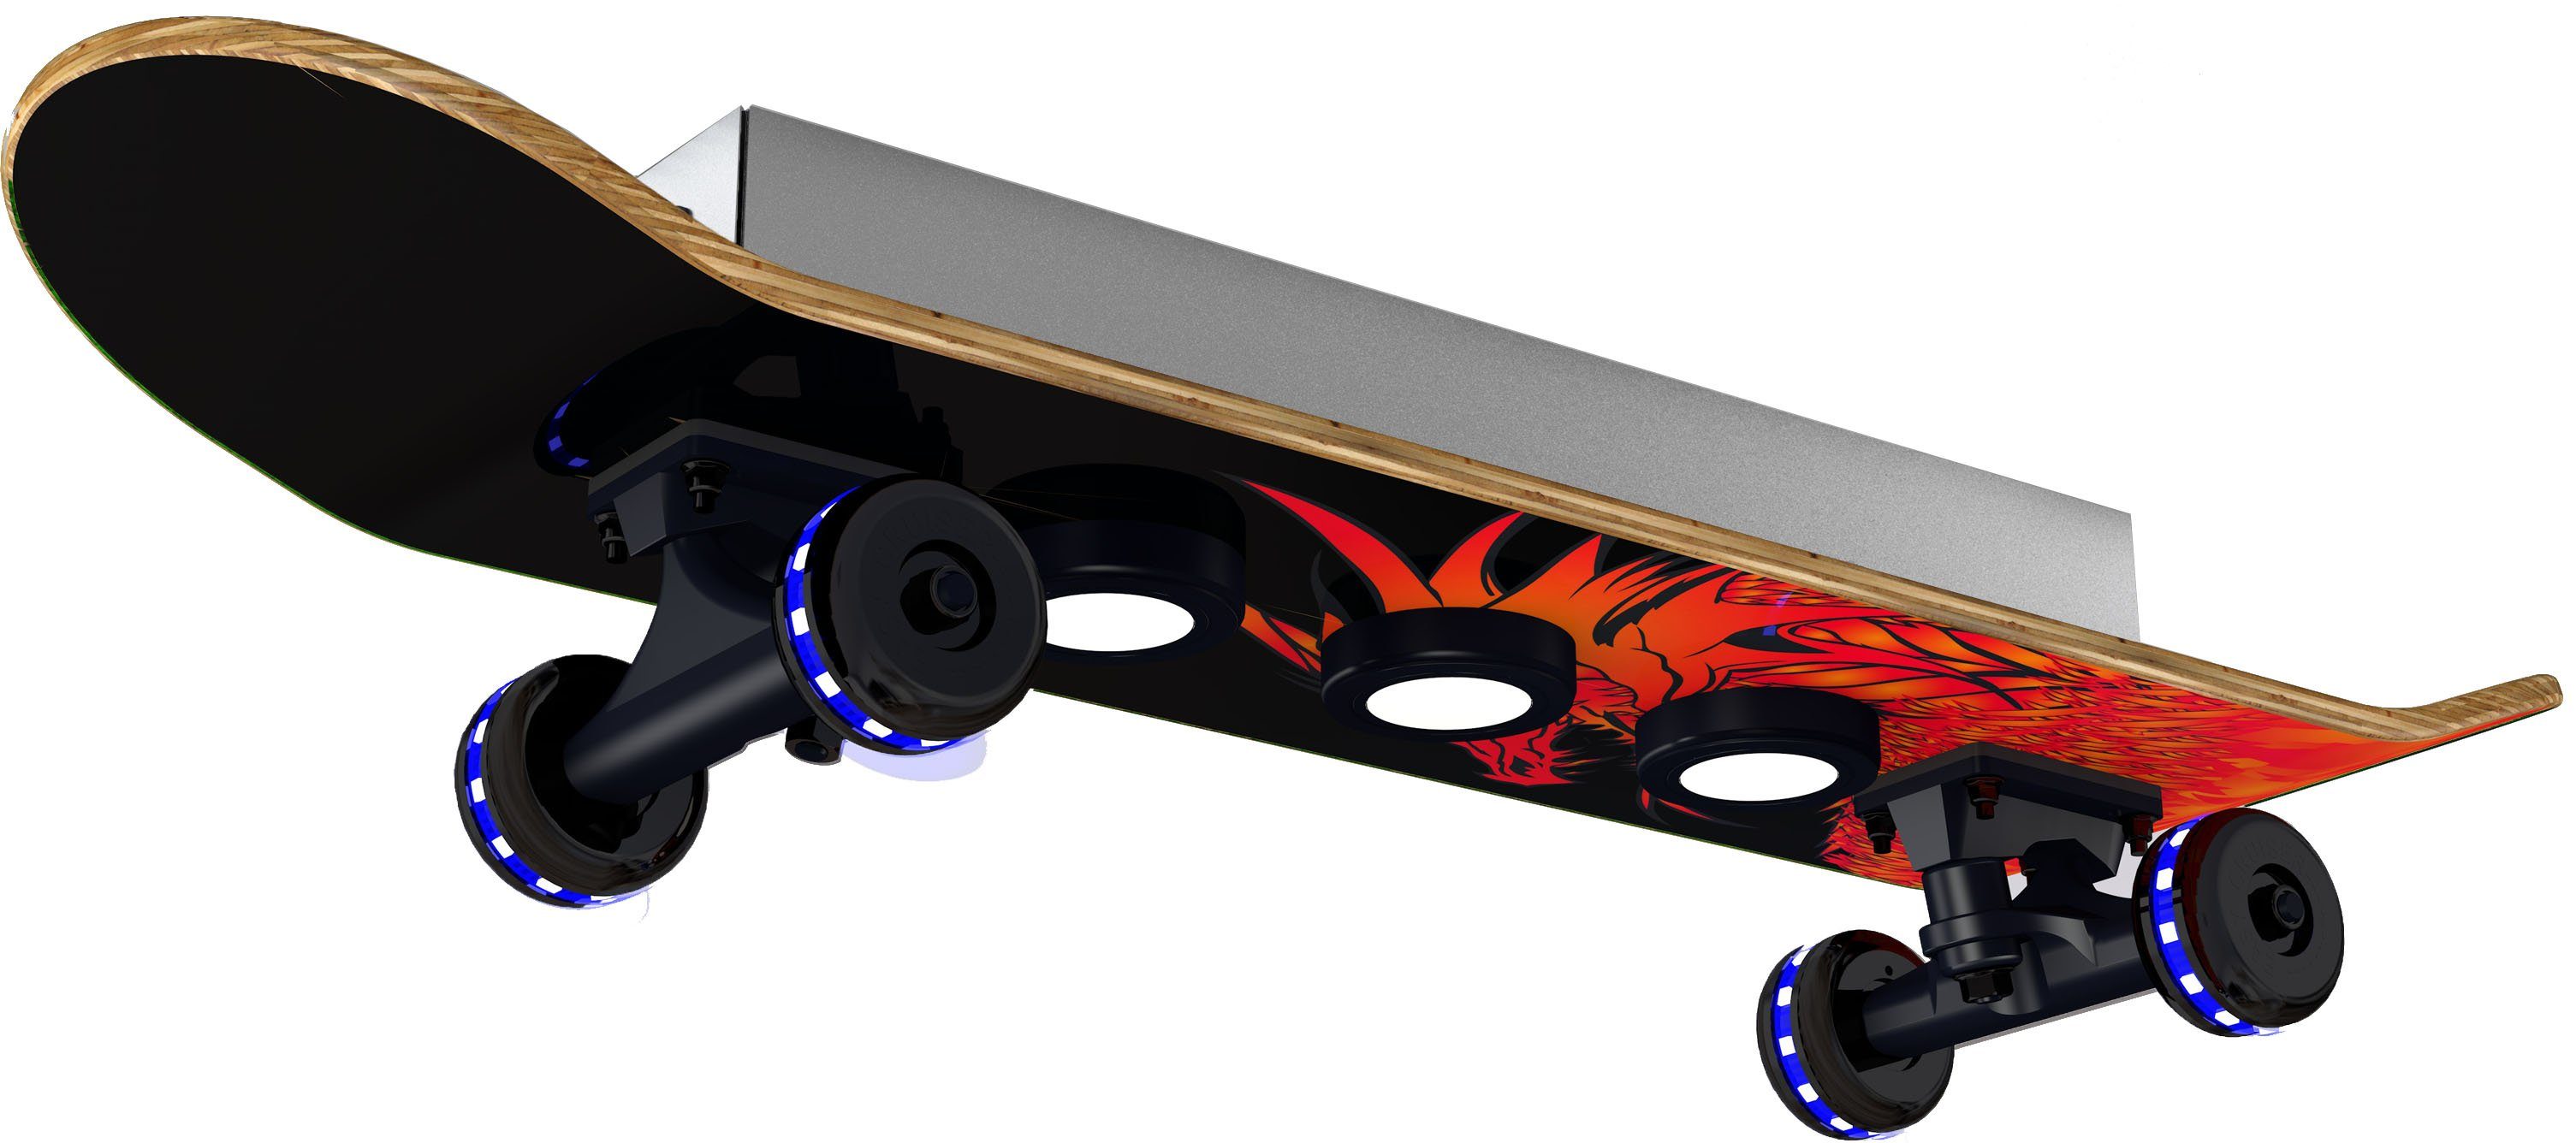 LED Rollen - Dimmfunktion, Skateboard-Design, Dragon, fest LED Farbwechsel, EVOTEC Easy integriert, Warmweiß, Wheels Cruiser, Deckenleuchte